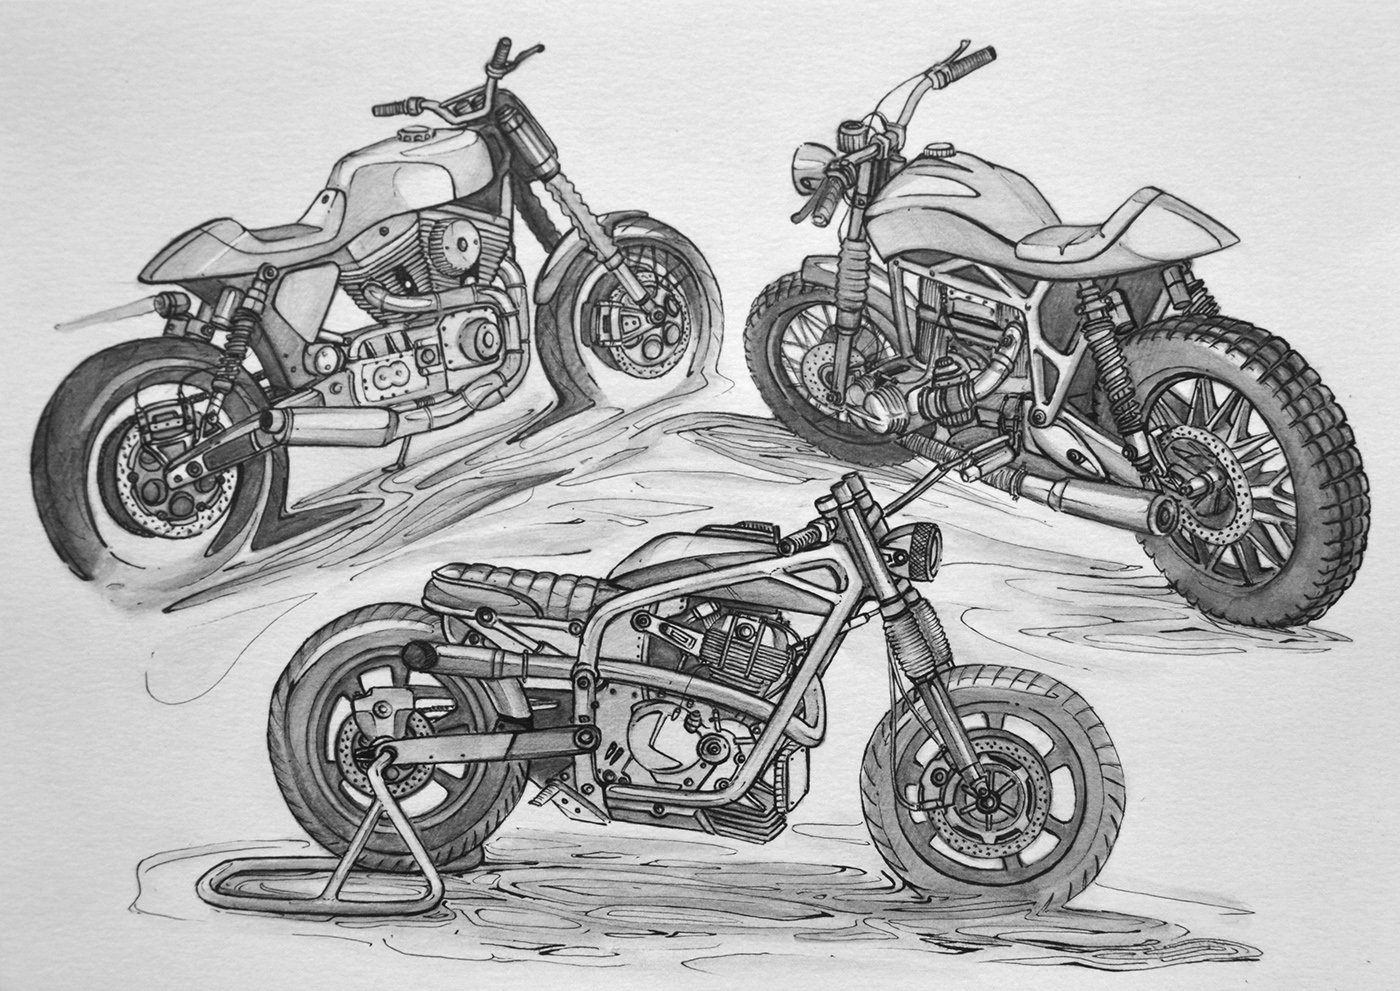 motorcycles cafe racer scrambler typo handmade watersoluble graphite concepts moto Vehicle transportation sketch design Retro sketchs